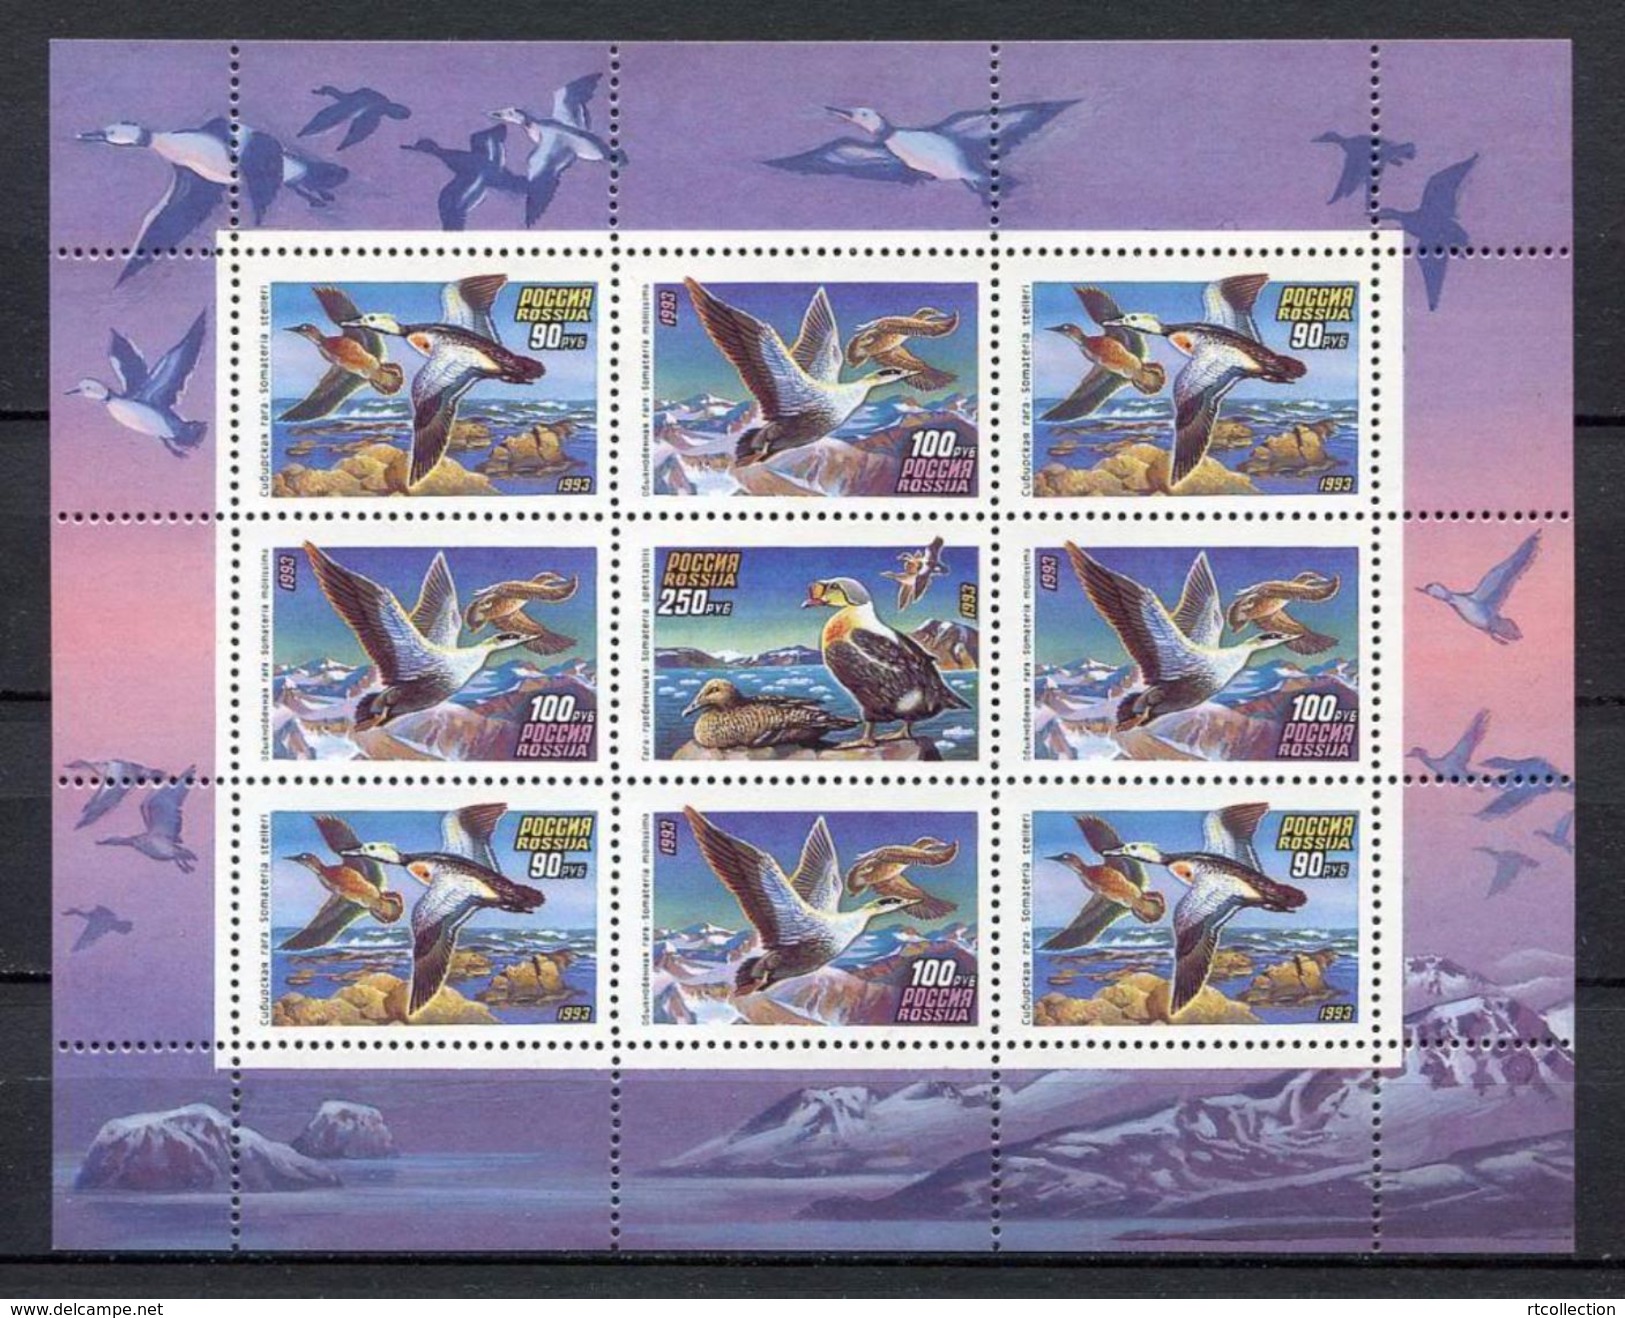 Russia 1993 S/S Ducks Duck Birds Bird Animals Animal Fauna Nature MNH Stamps Michel 320-322 Klb Scott#6157a - Sammlungen